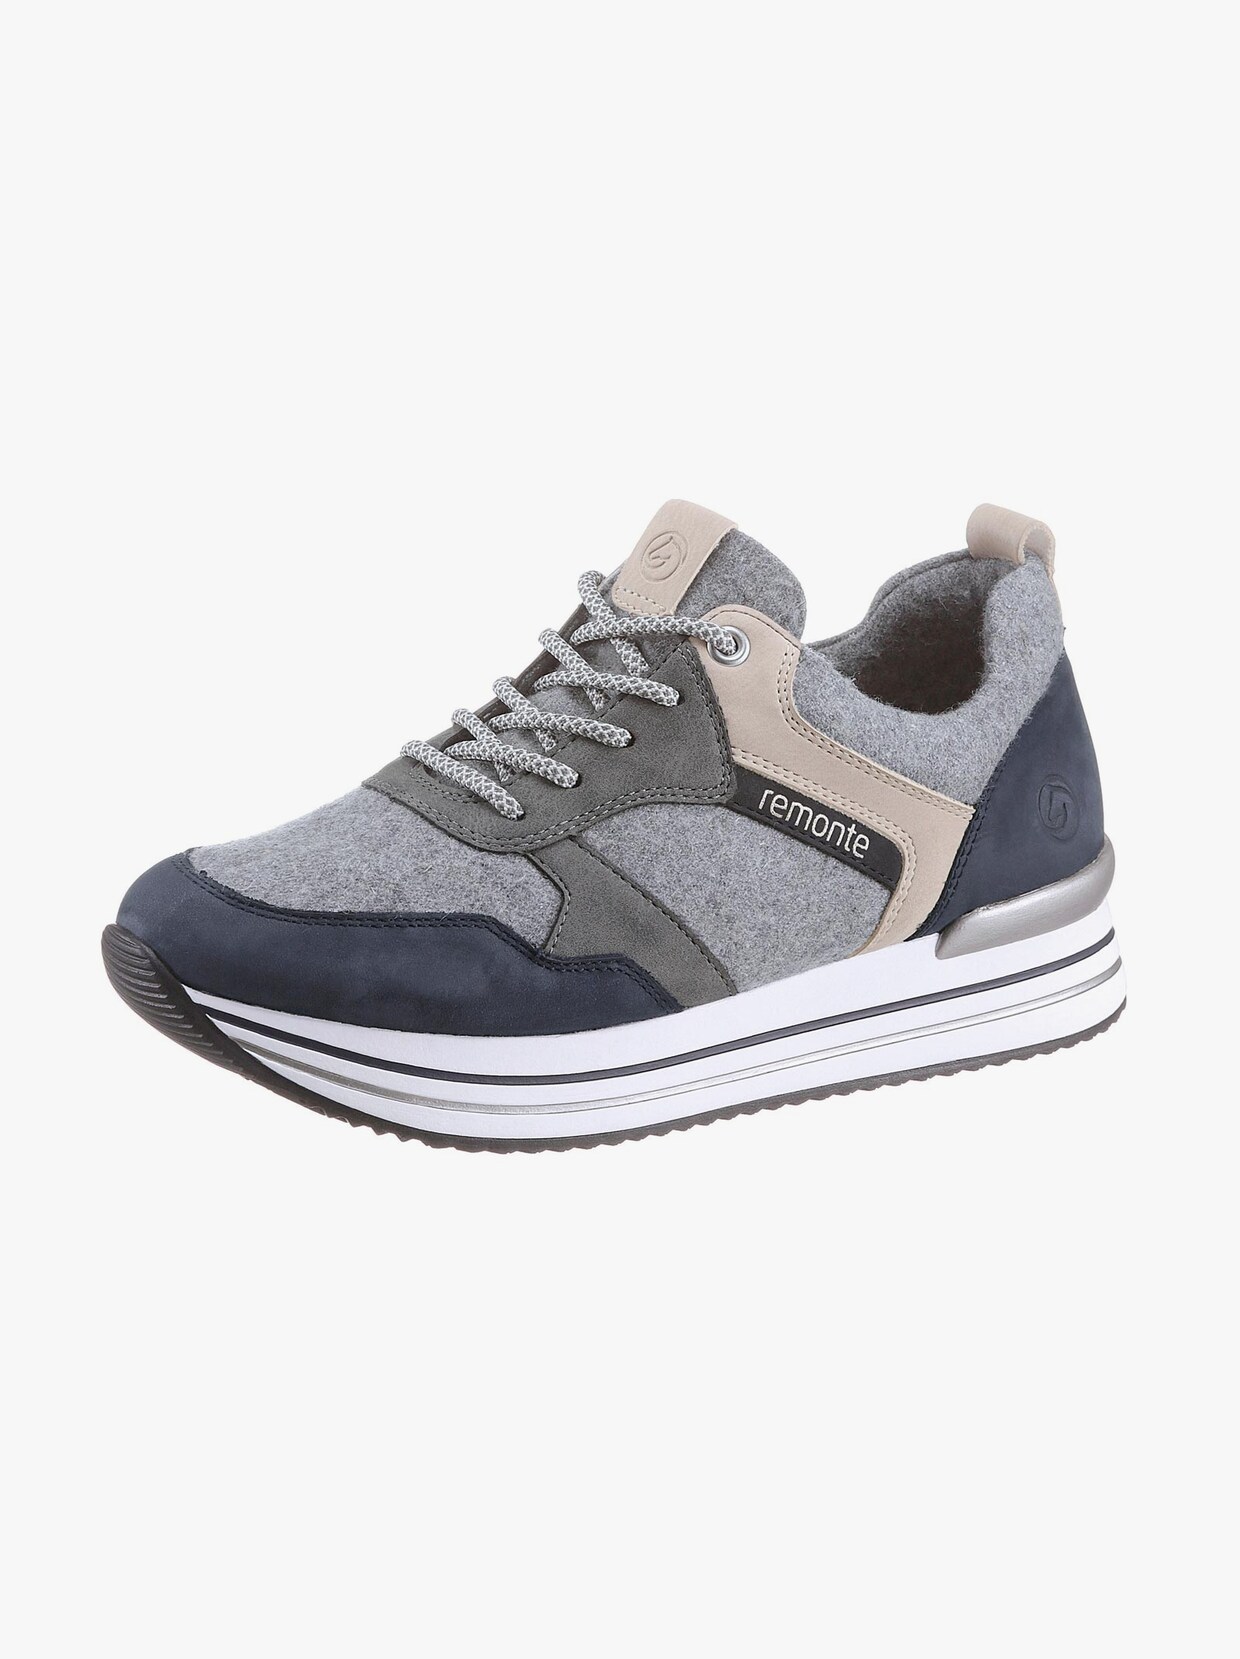 Remonte Sneaker - grau